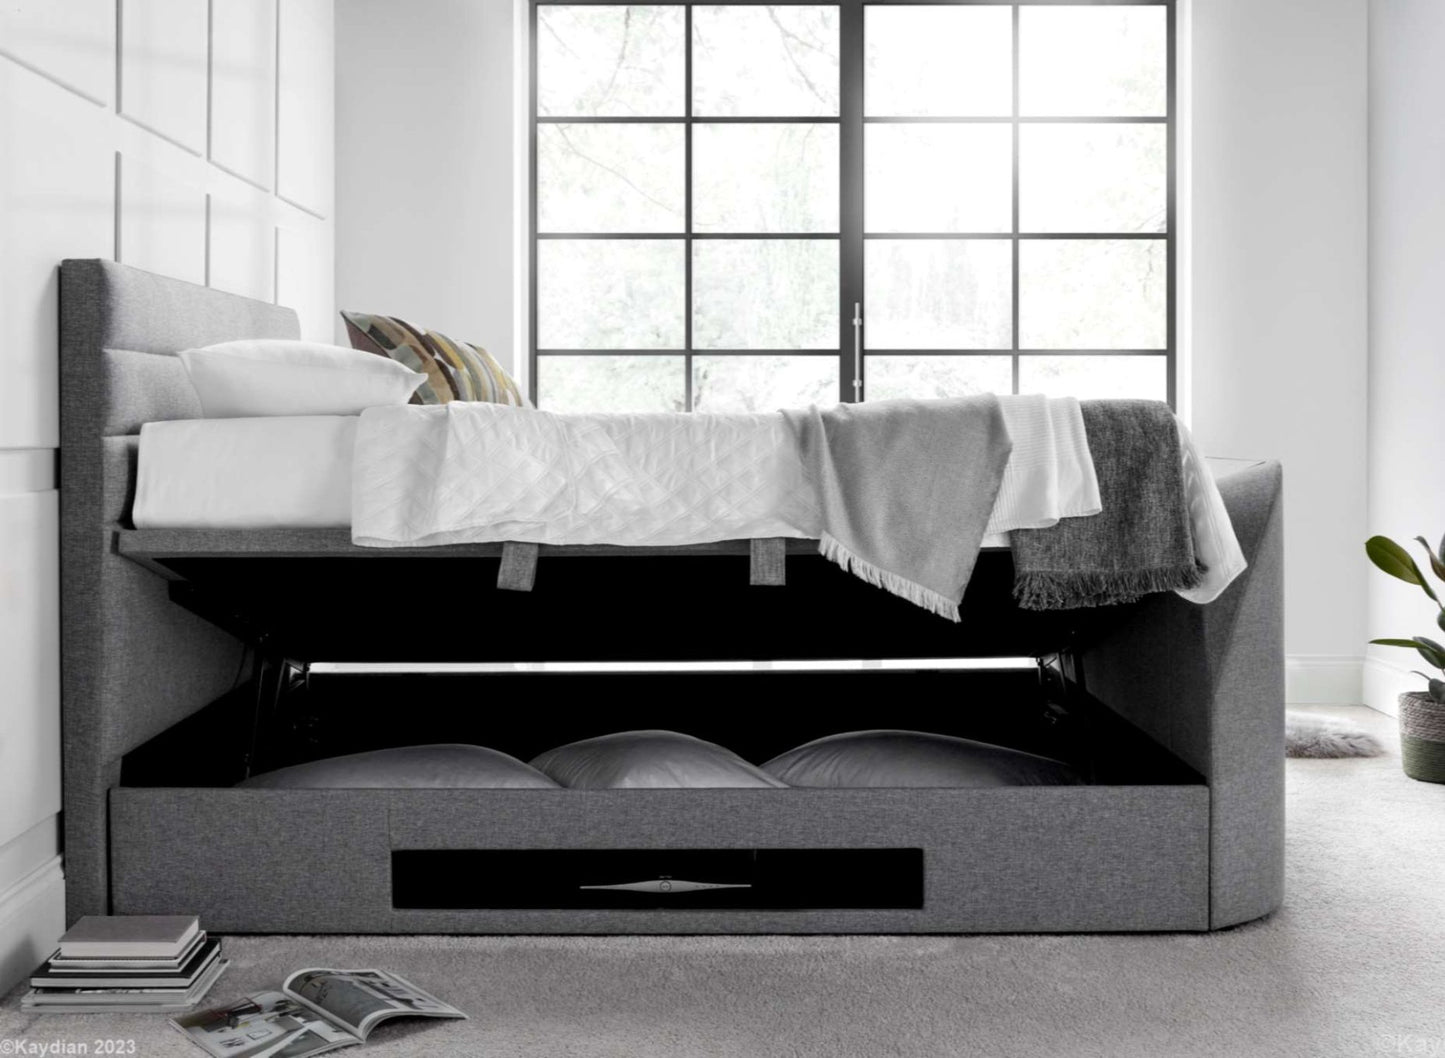 Appleton TV Ottoman Storage Bed Frame - Marbella Grey - TV Beds Northwest - APPTV135MDG - appleton - doubletvbed